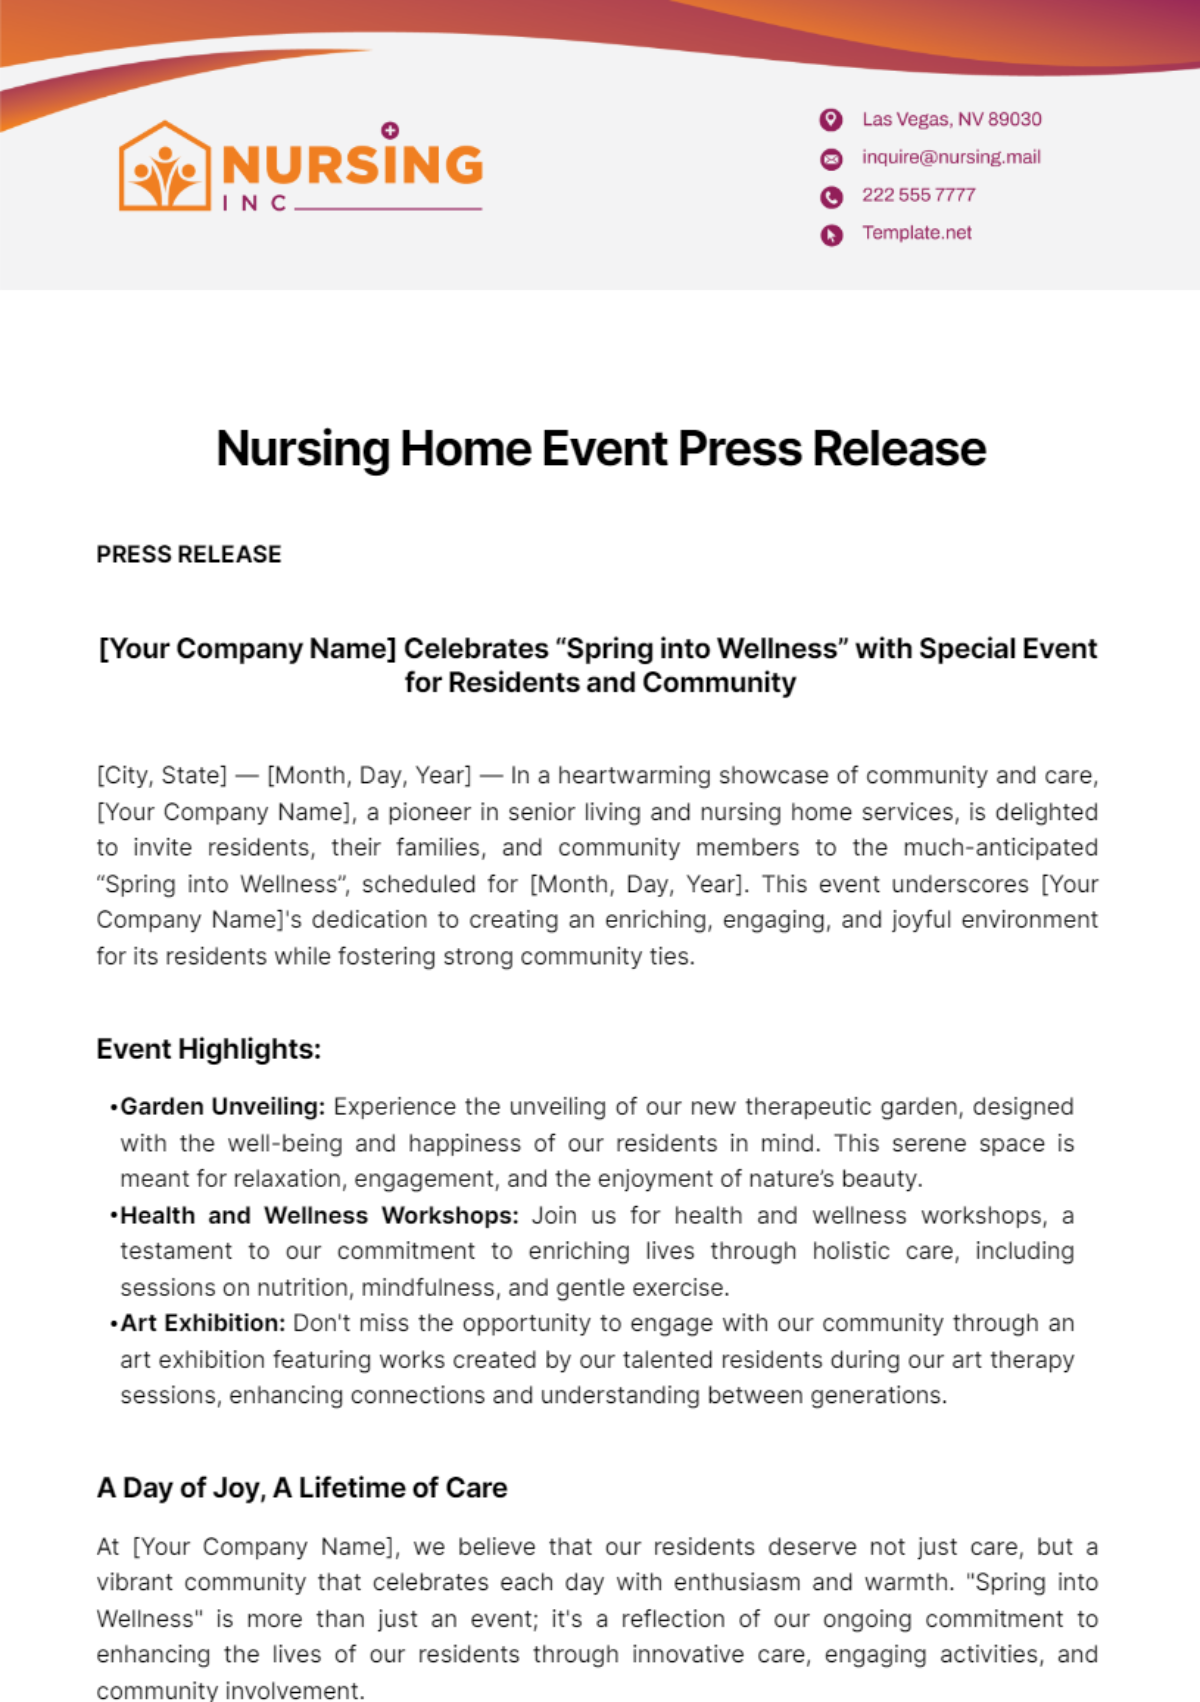 Nursing Home Event Press Release Template